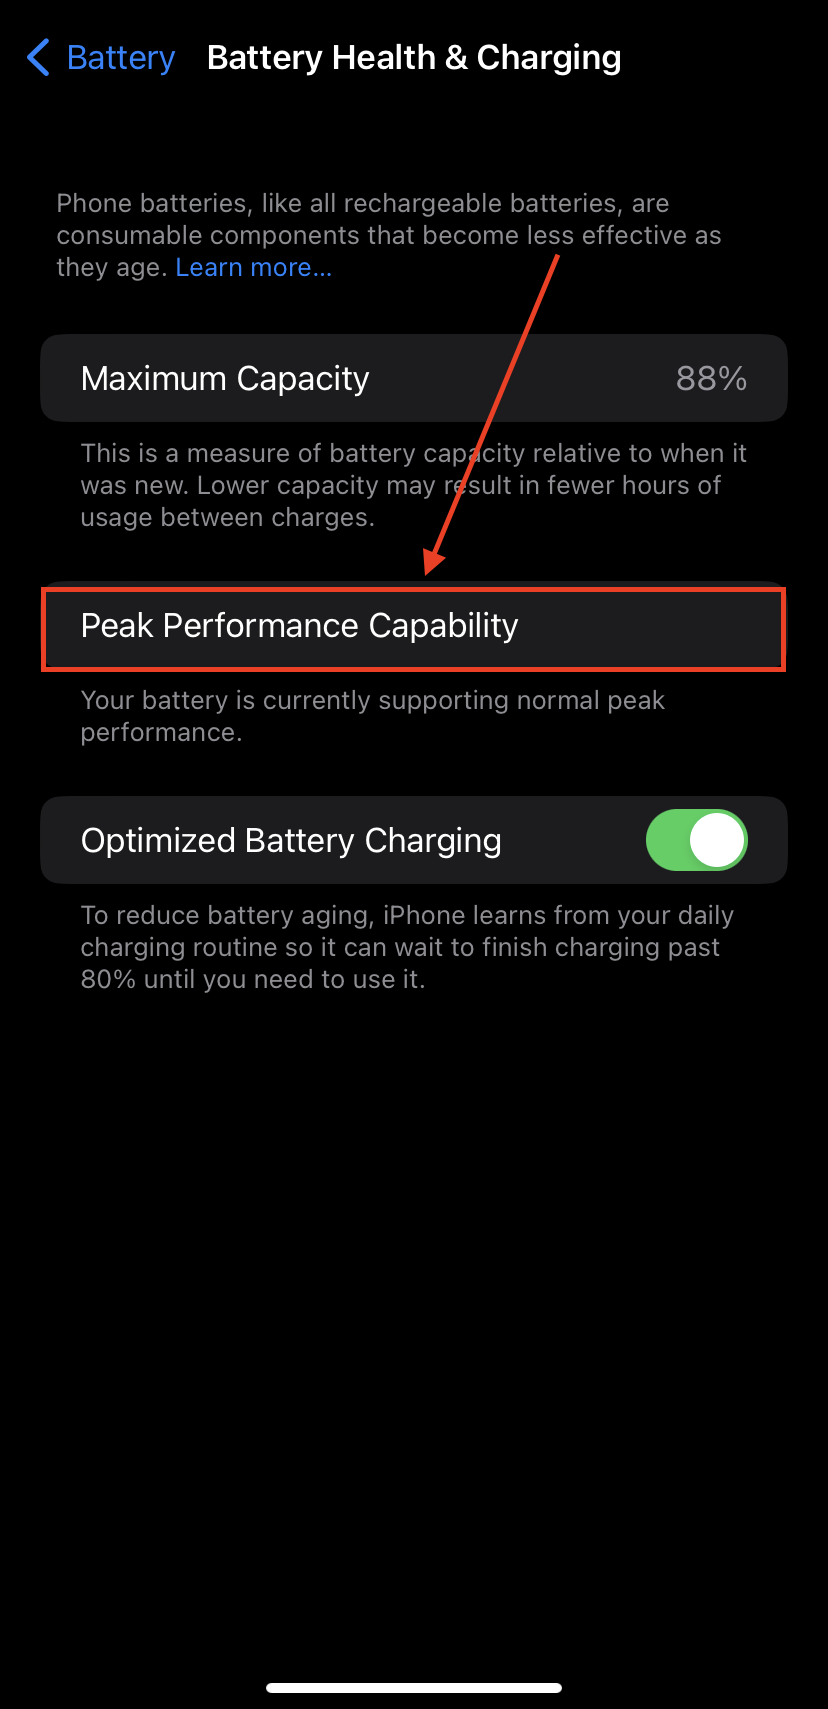 Peak Performance Capability in iPhone's battery settings